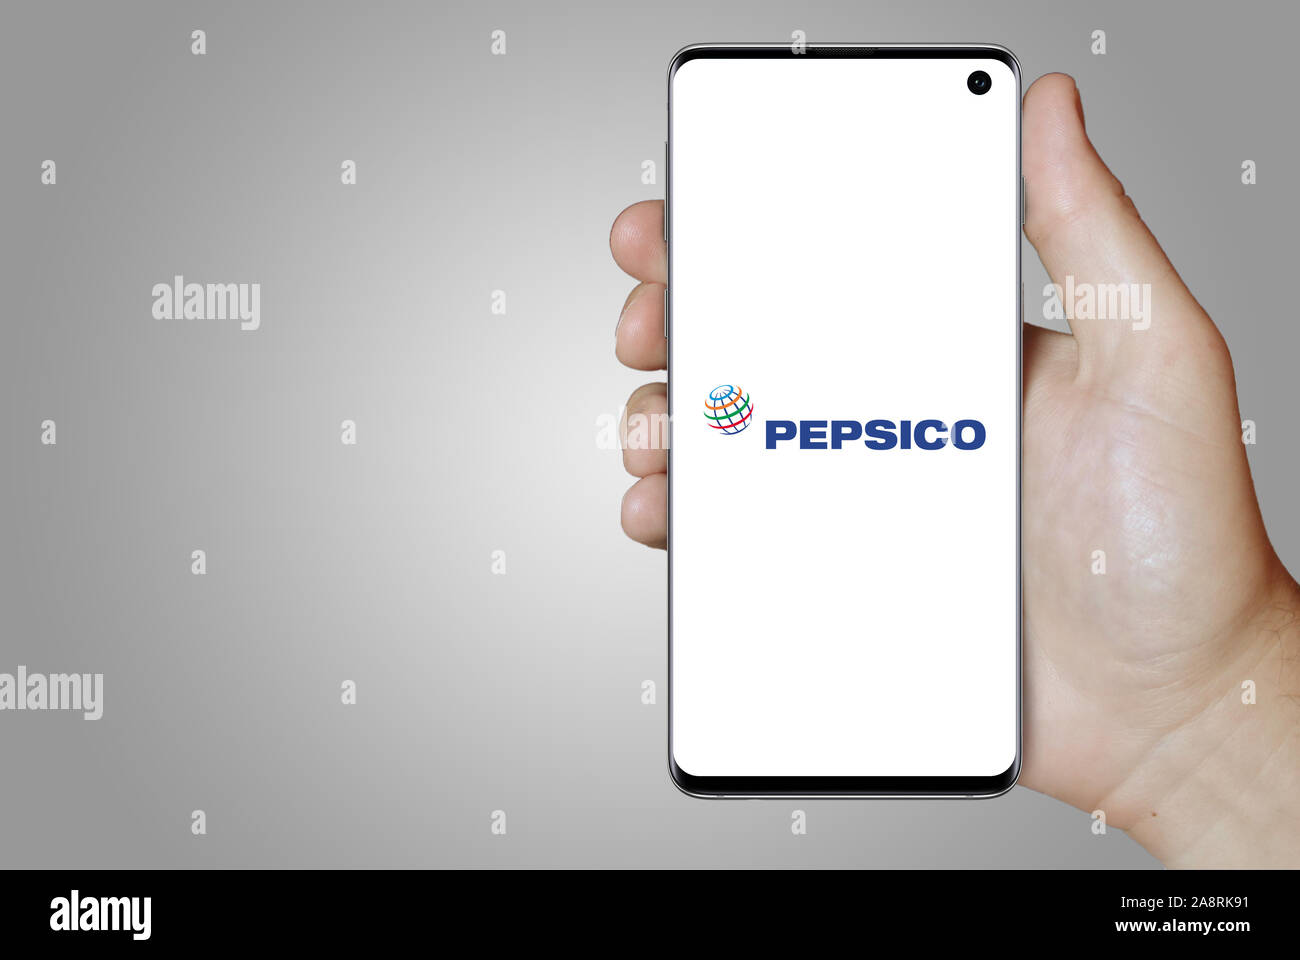 Logo of public company PepsiCo Inc. displayed on a smartphone. Grey background. Credit: PIXDUCE Stock Photo